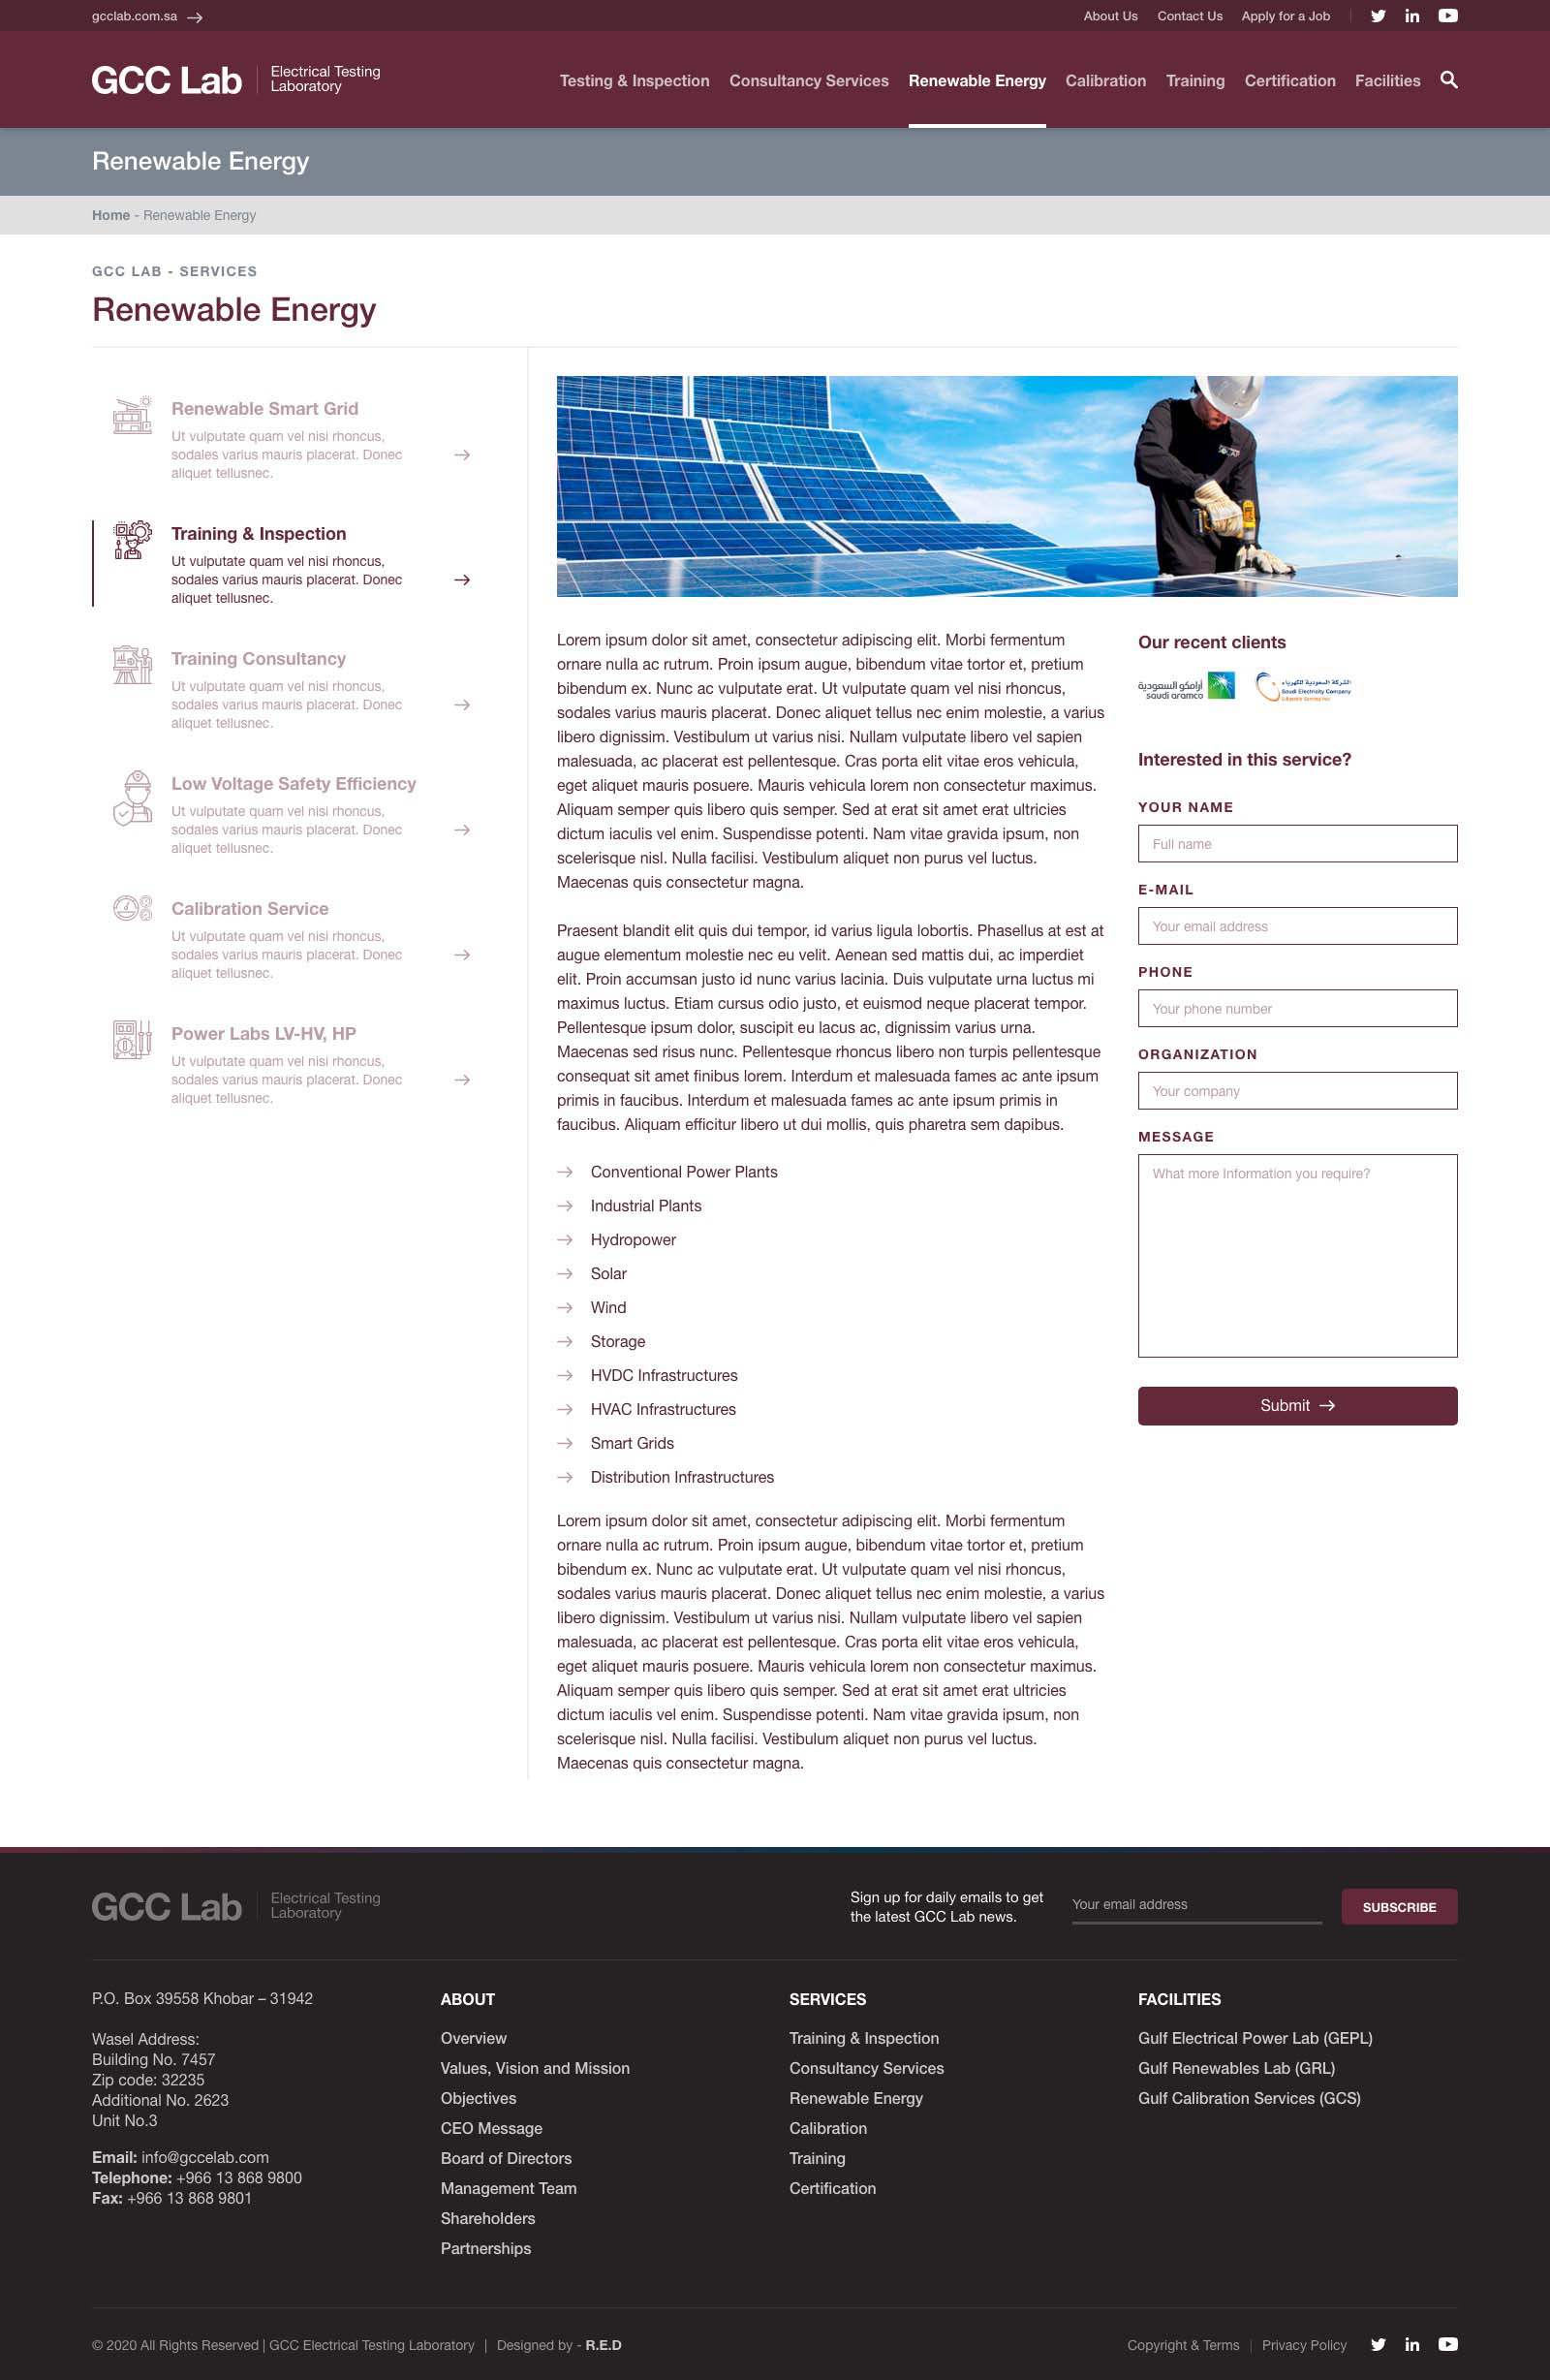 04-Renewable Energey Services